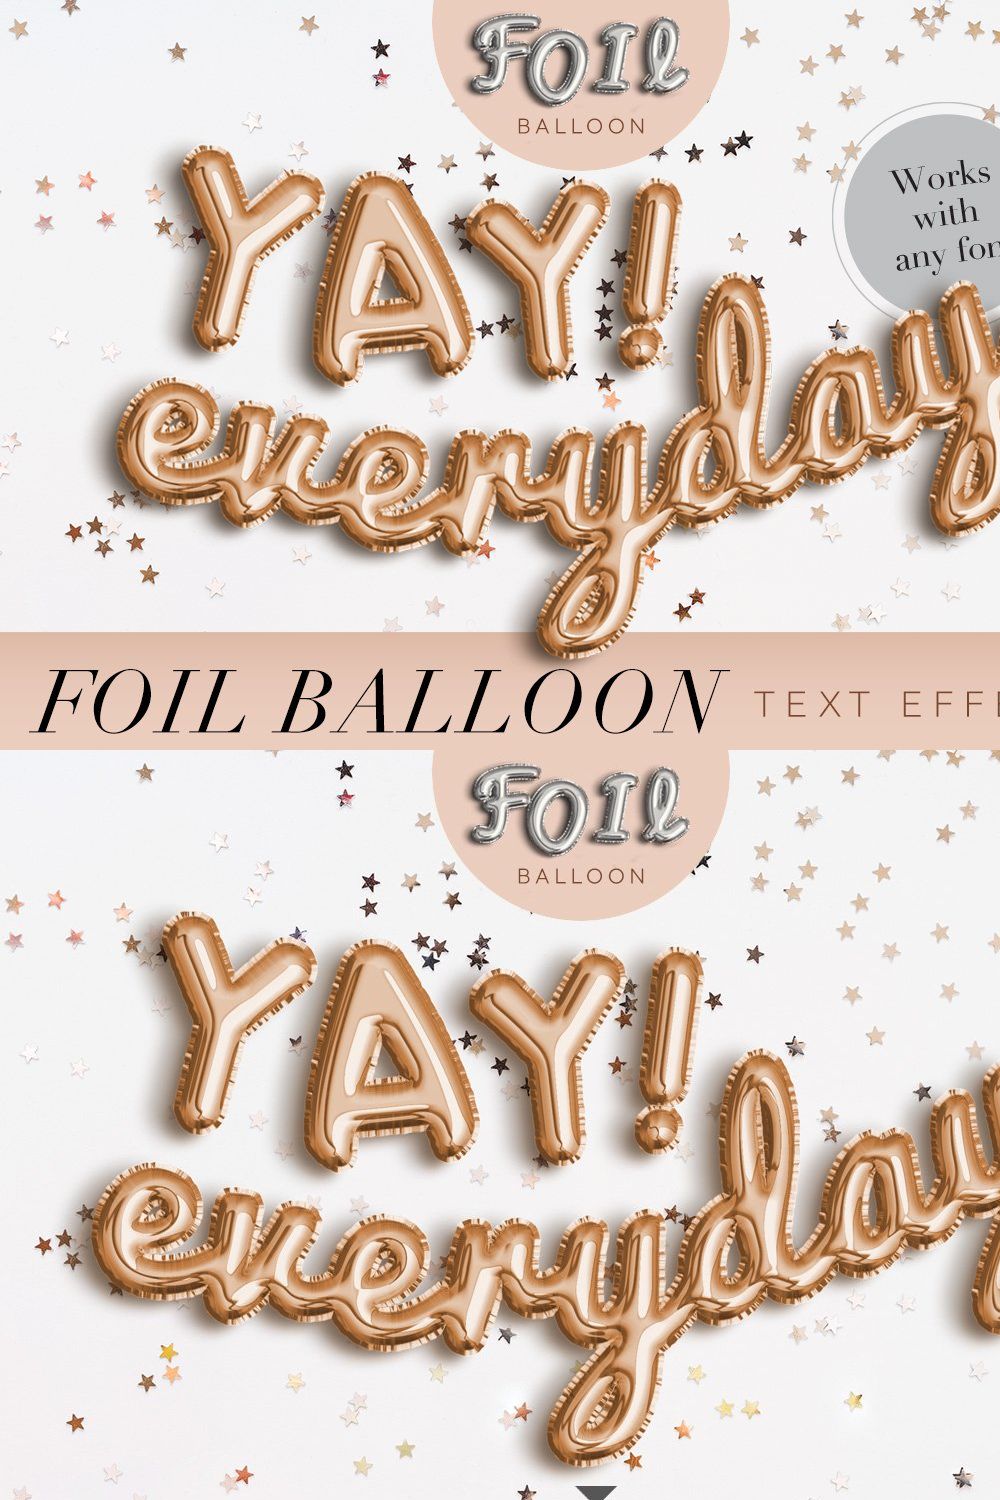 Foil Balloon Text Effect pinterest preview image.